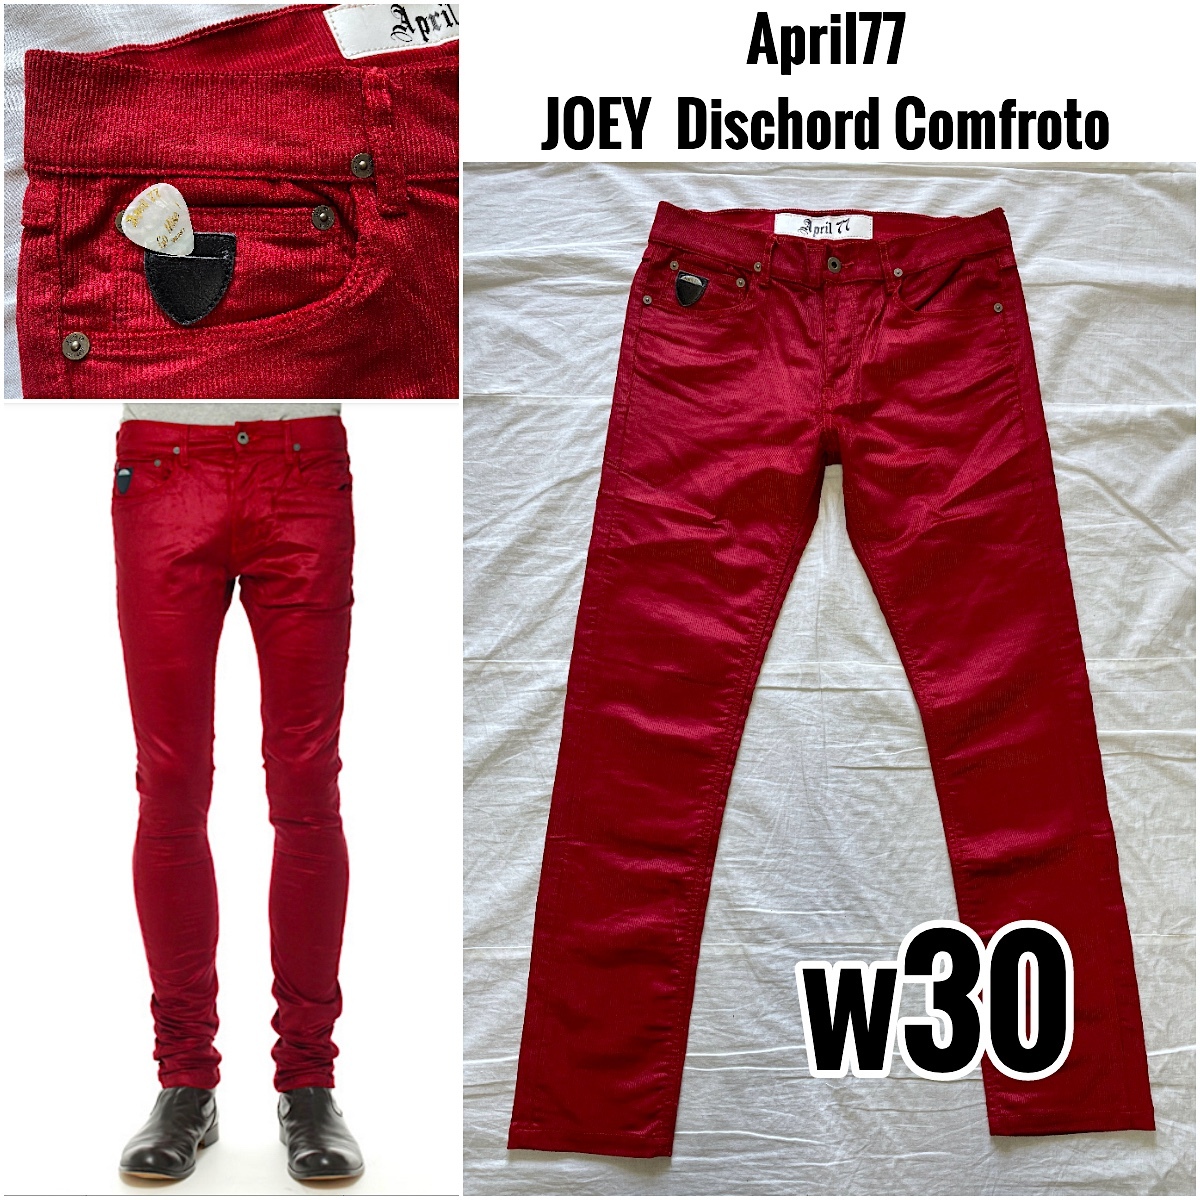 April77 JOEY Dischord Comfroto w30 光沢 シャイニーコーデュロイ エイプリル 77 オリジナル ピック付属